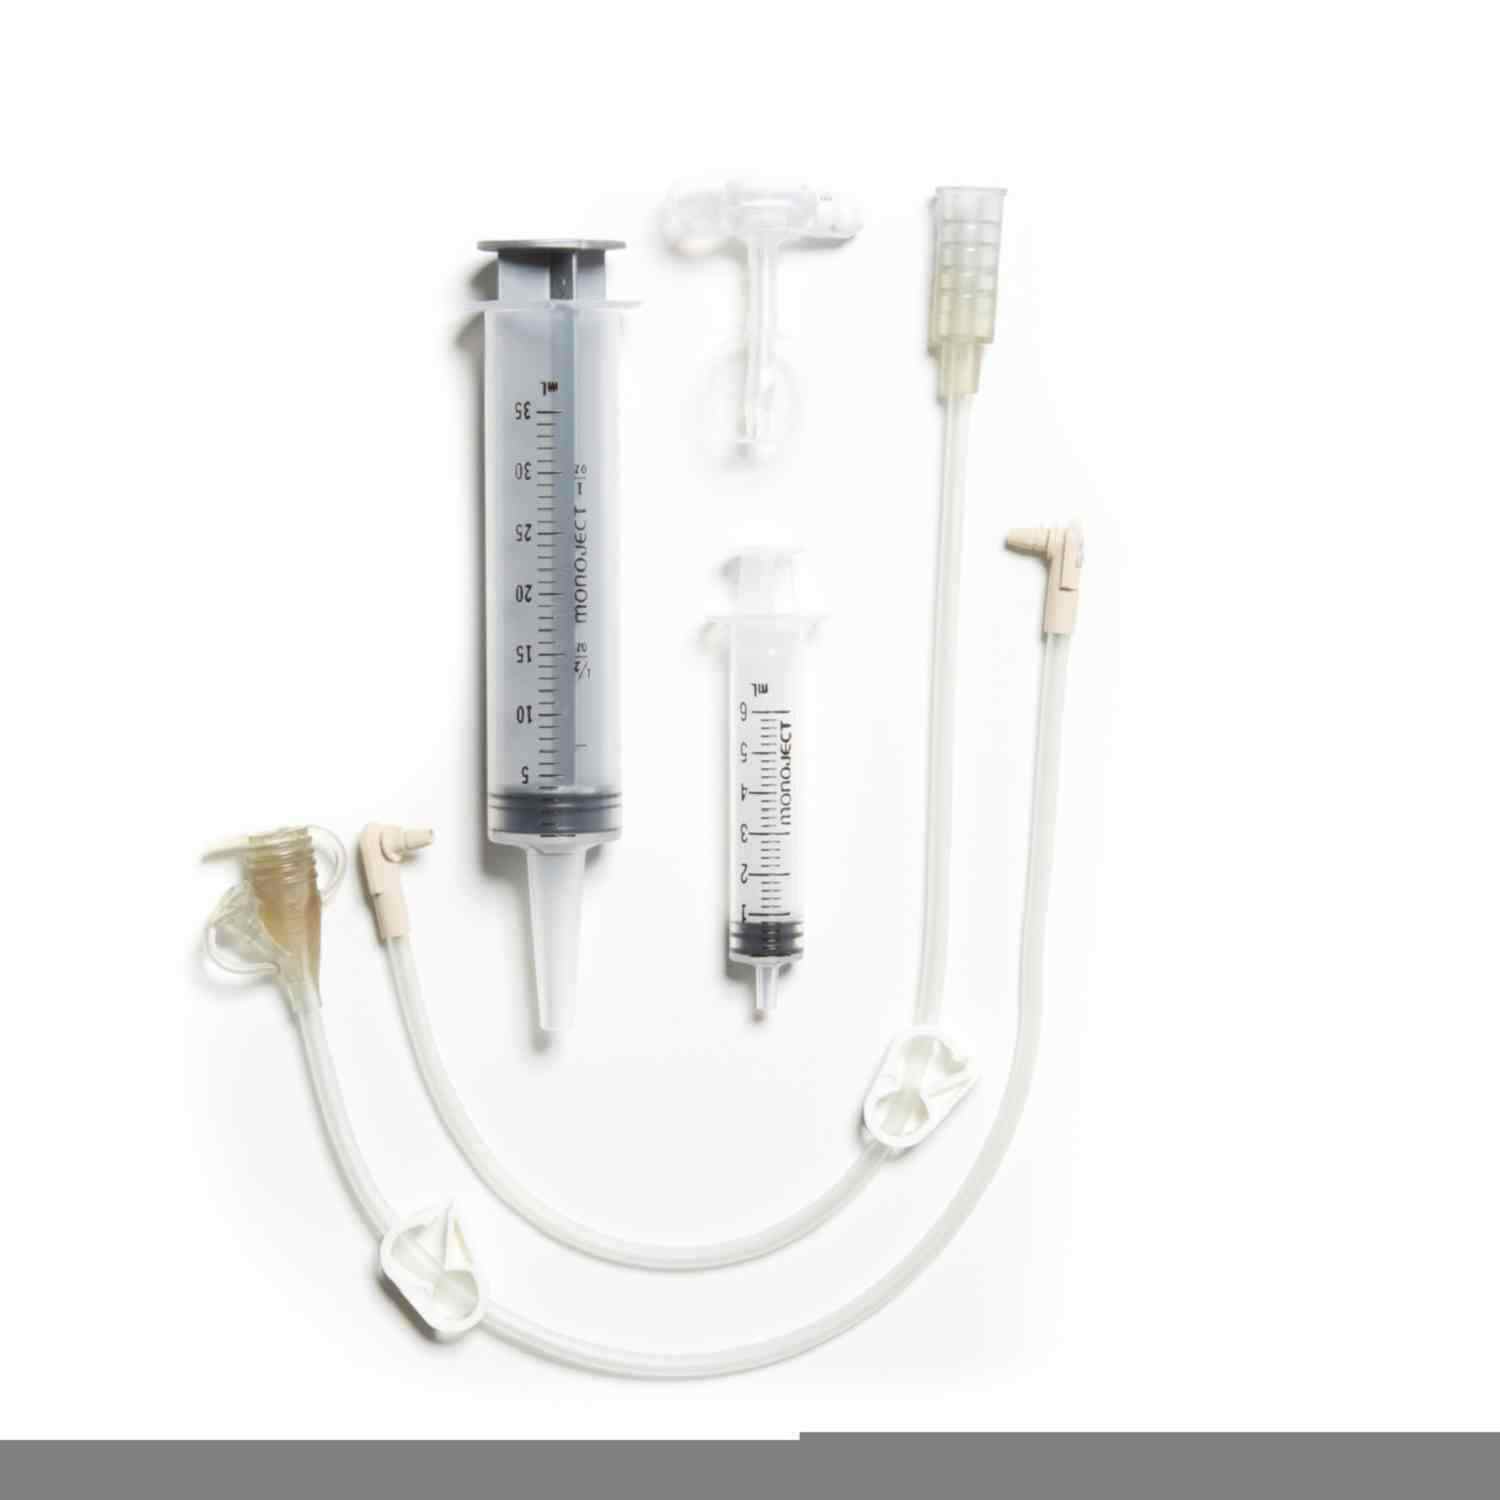 MIC-KEY Low-Profile Gastrostomy Feeding Tube Kit, 14 Fr., 1.5 cm Tube, 0120-14-1-5, 1 Each